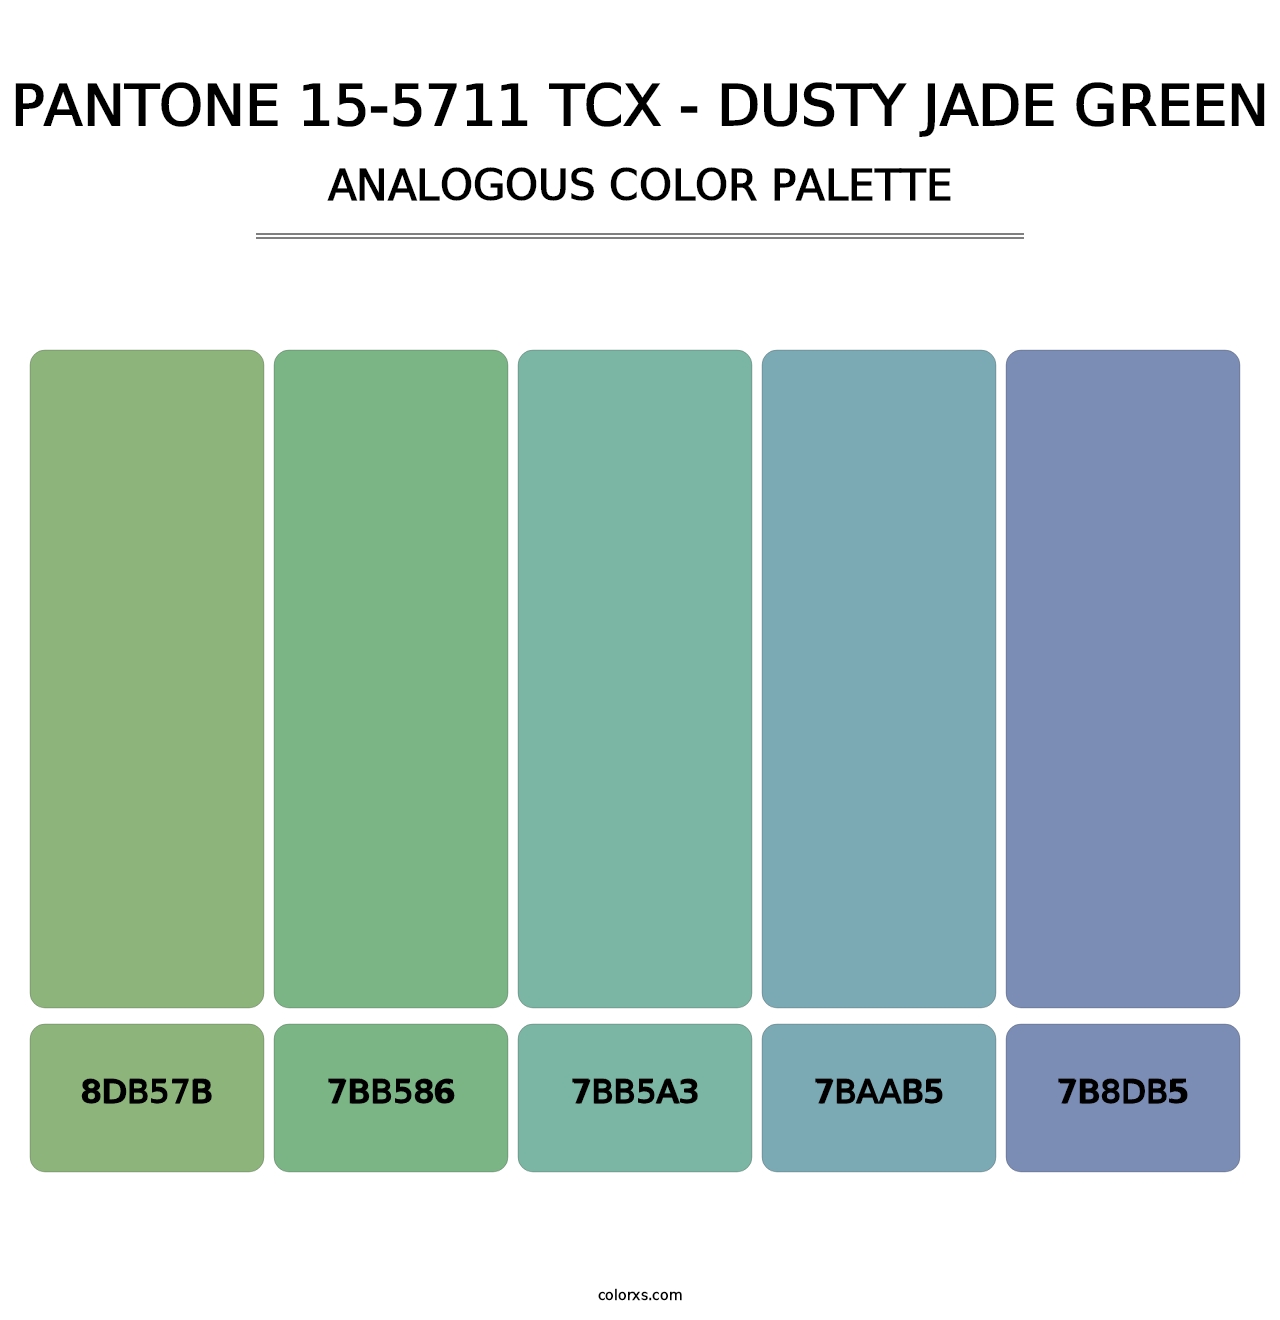 PANTONE 15-5711 TCX - Dusty Jade Green - Analogous Color Palette